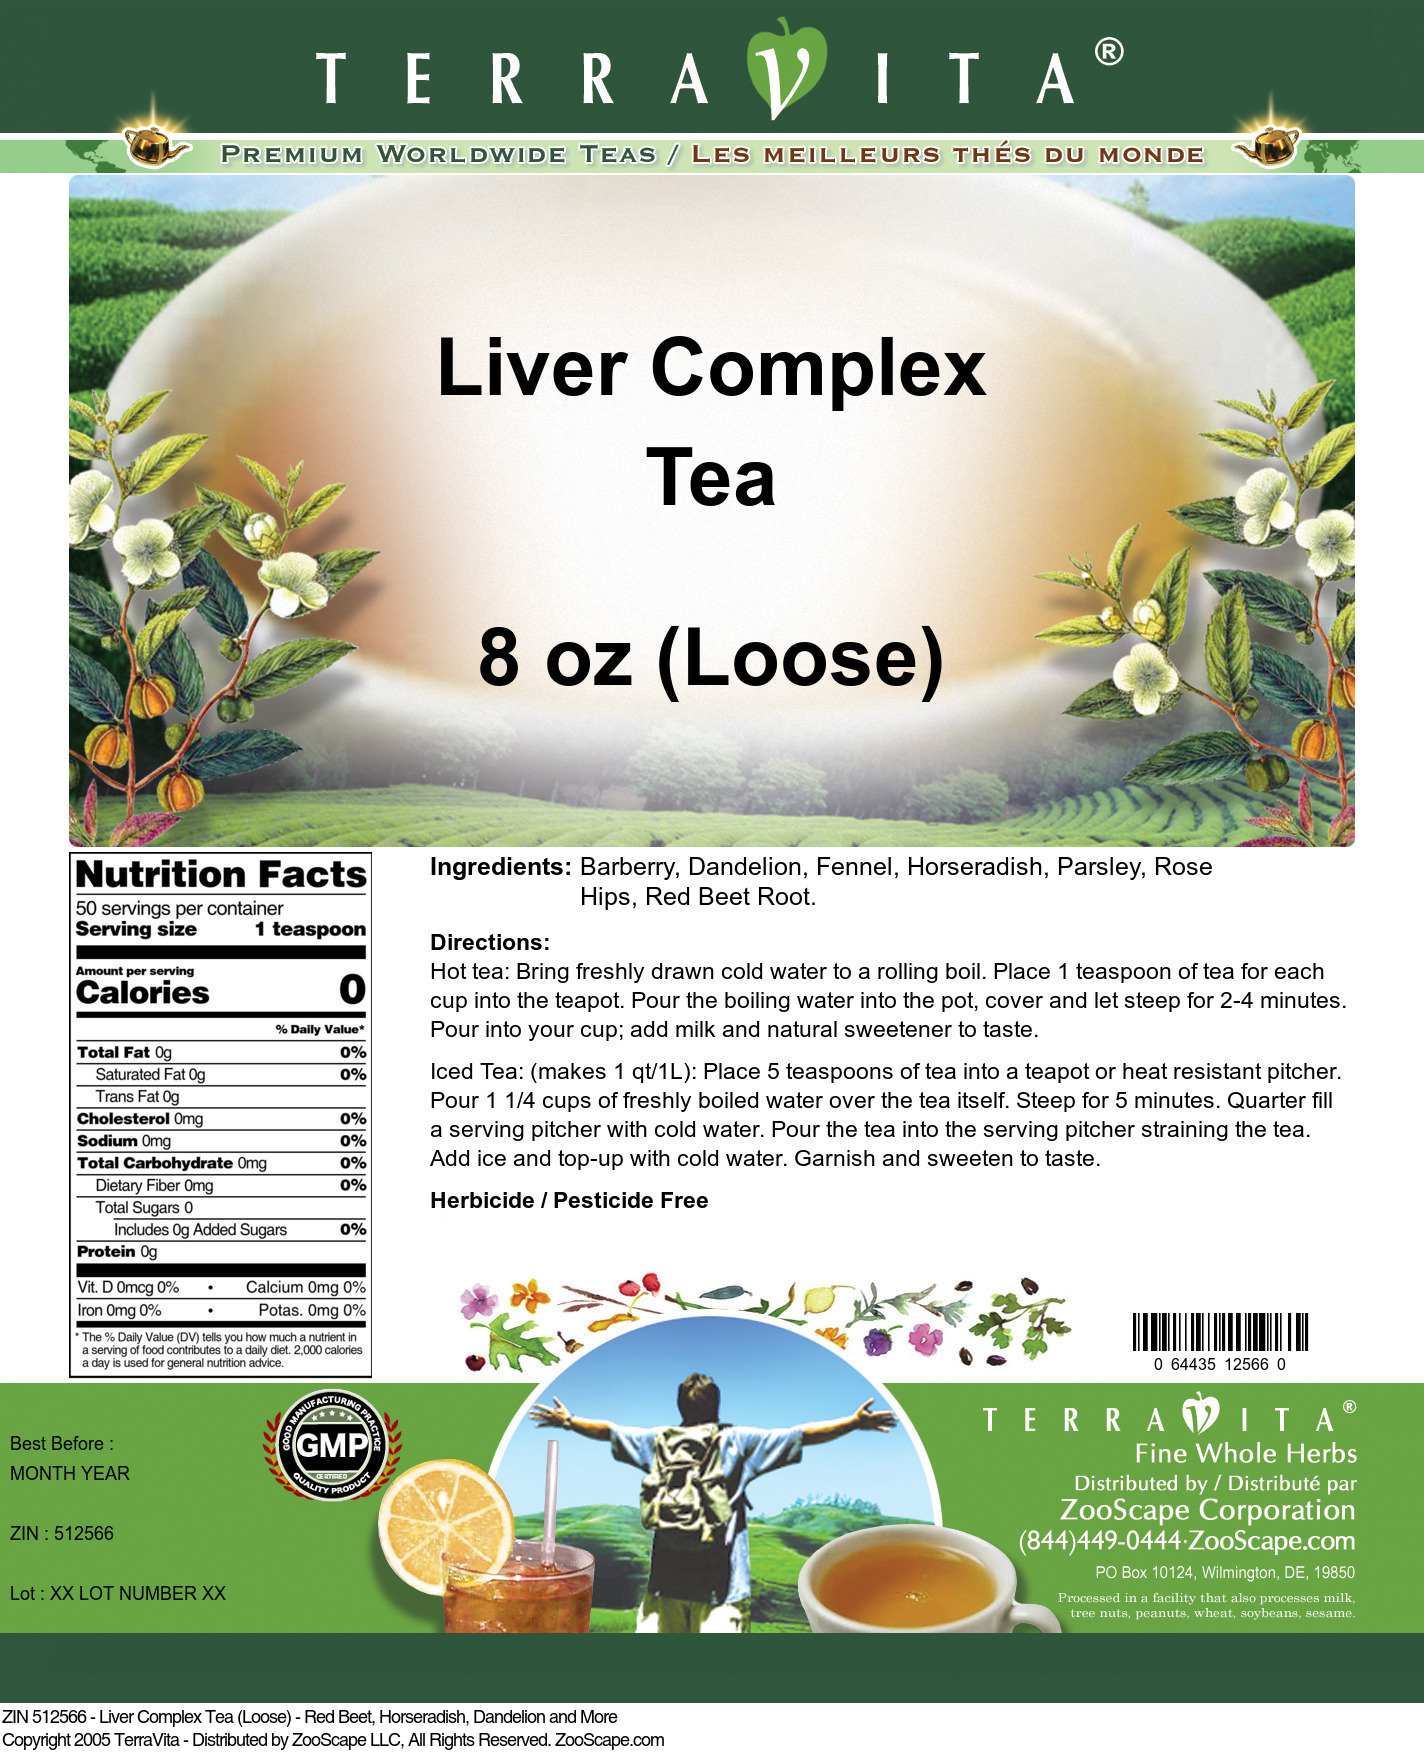 Liver Complex Tea (Loose) - Red Beet, Horseradish, Dandelion and More - Label